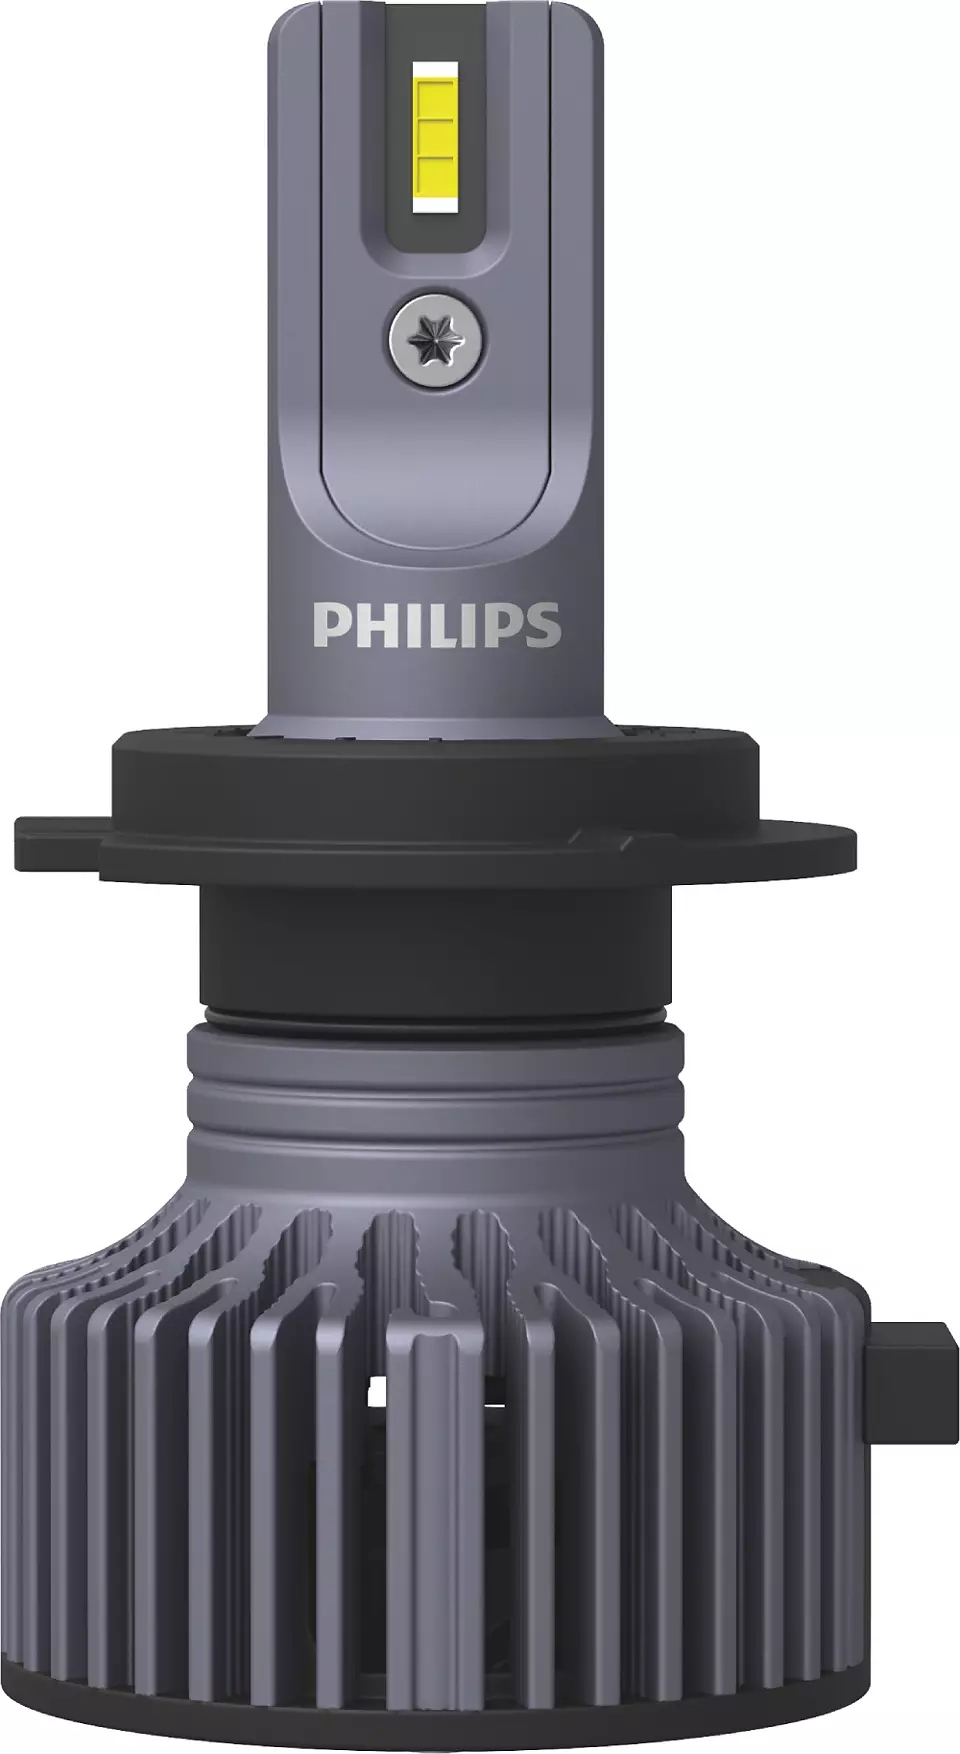 Philips H7 Ultinon Pro3021 Led 12V 24V 20W 6000K